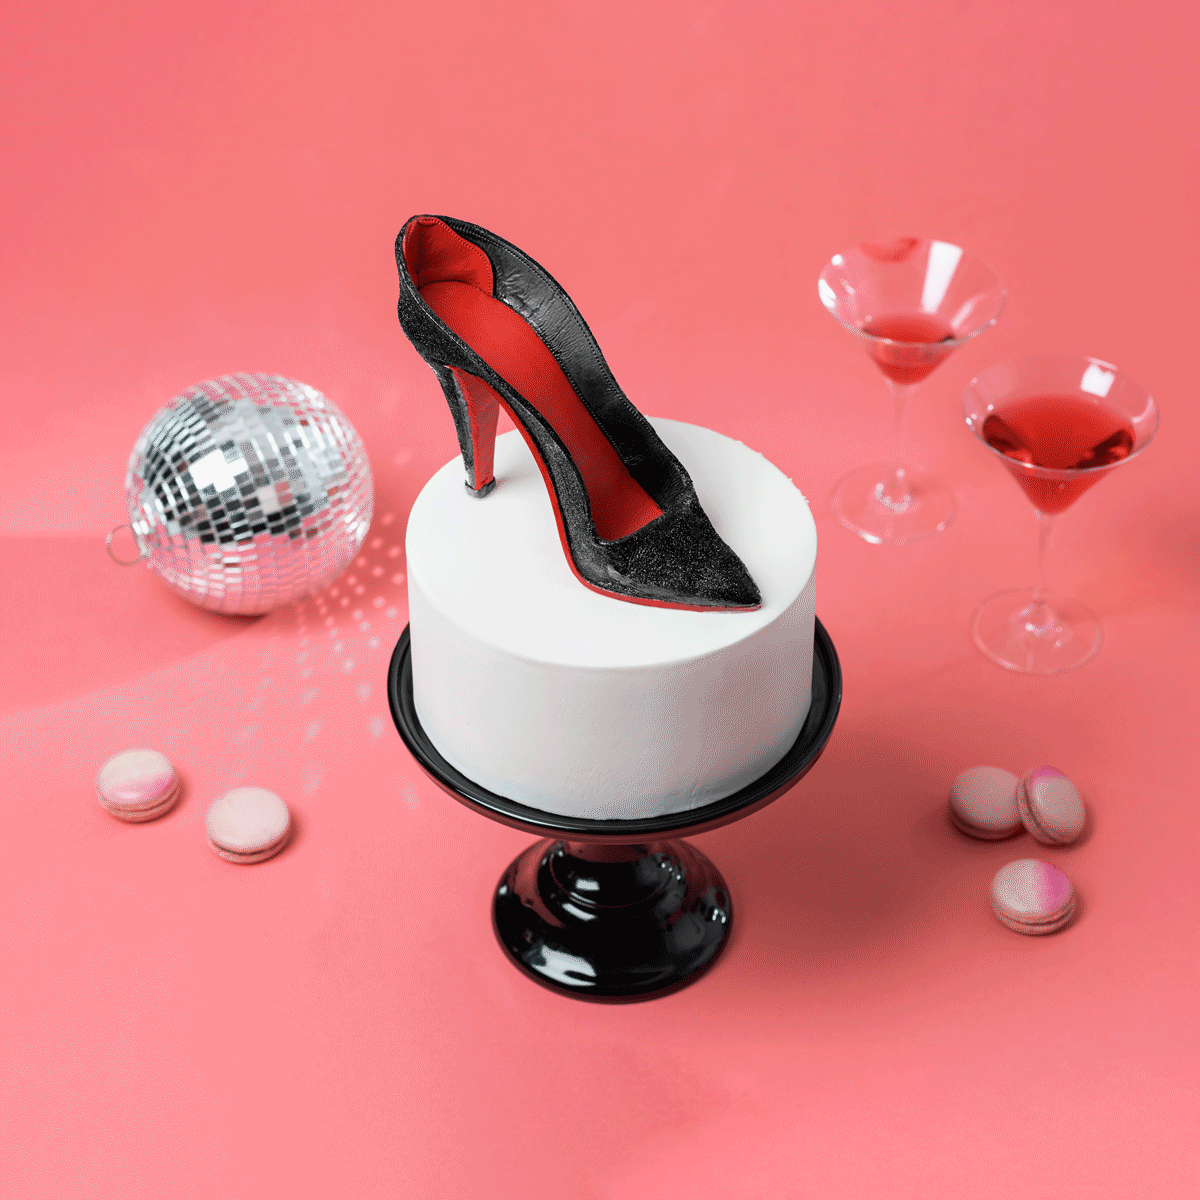 high heel on cake